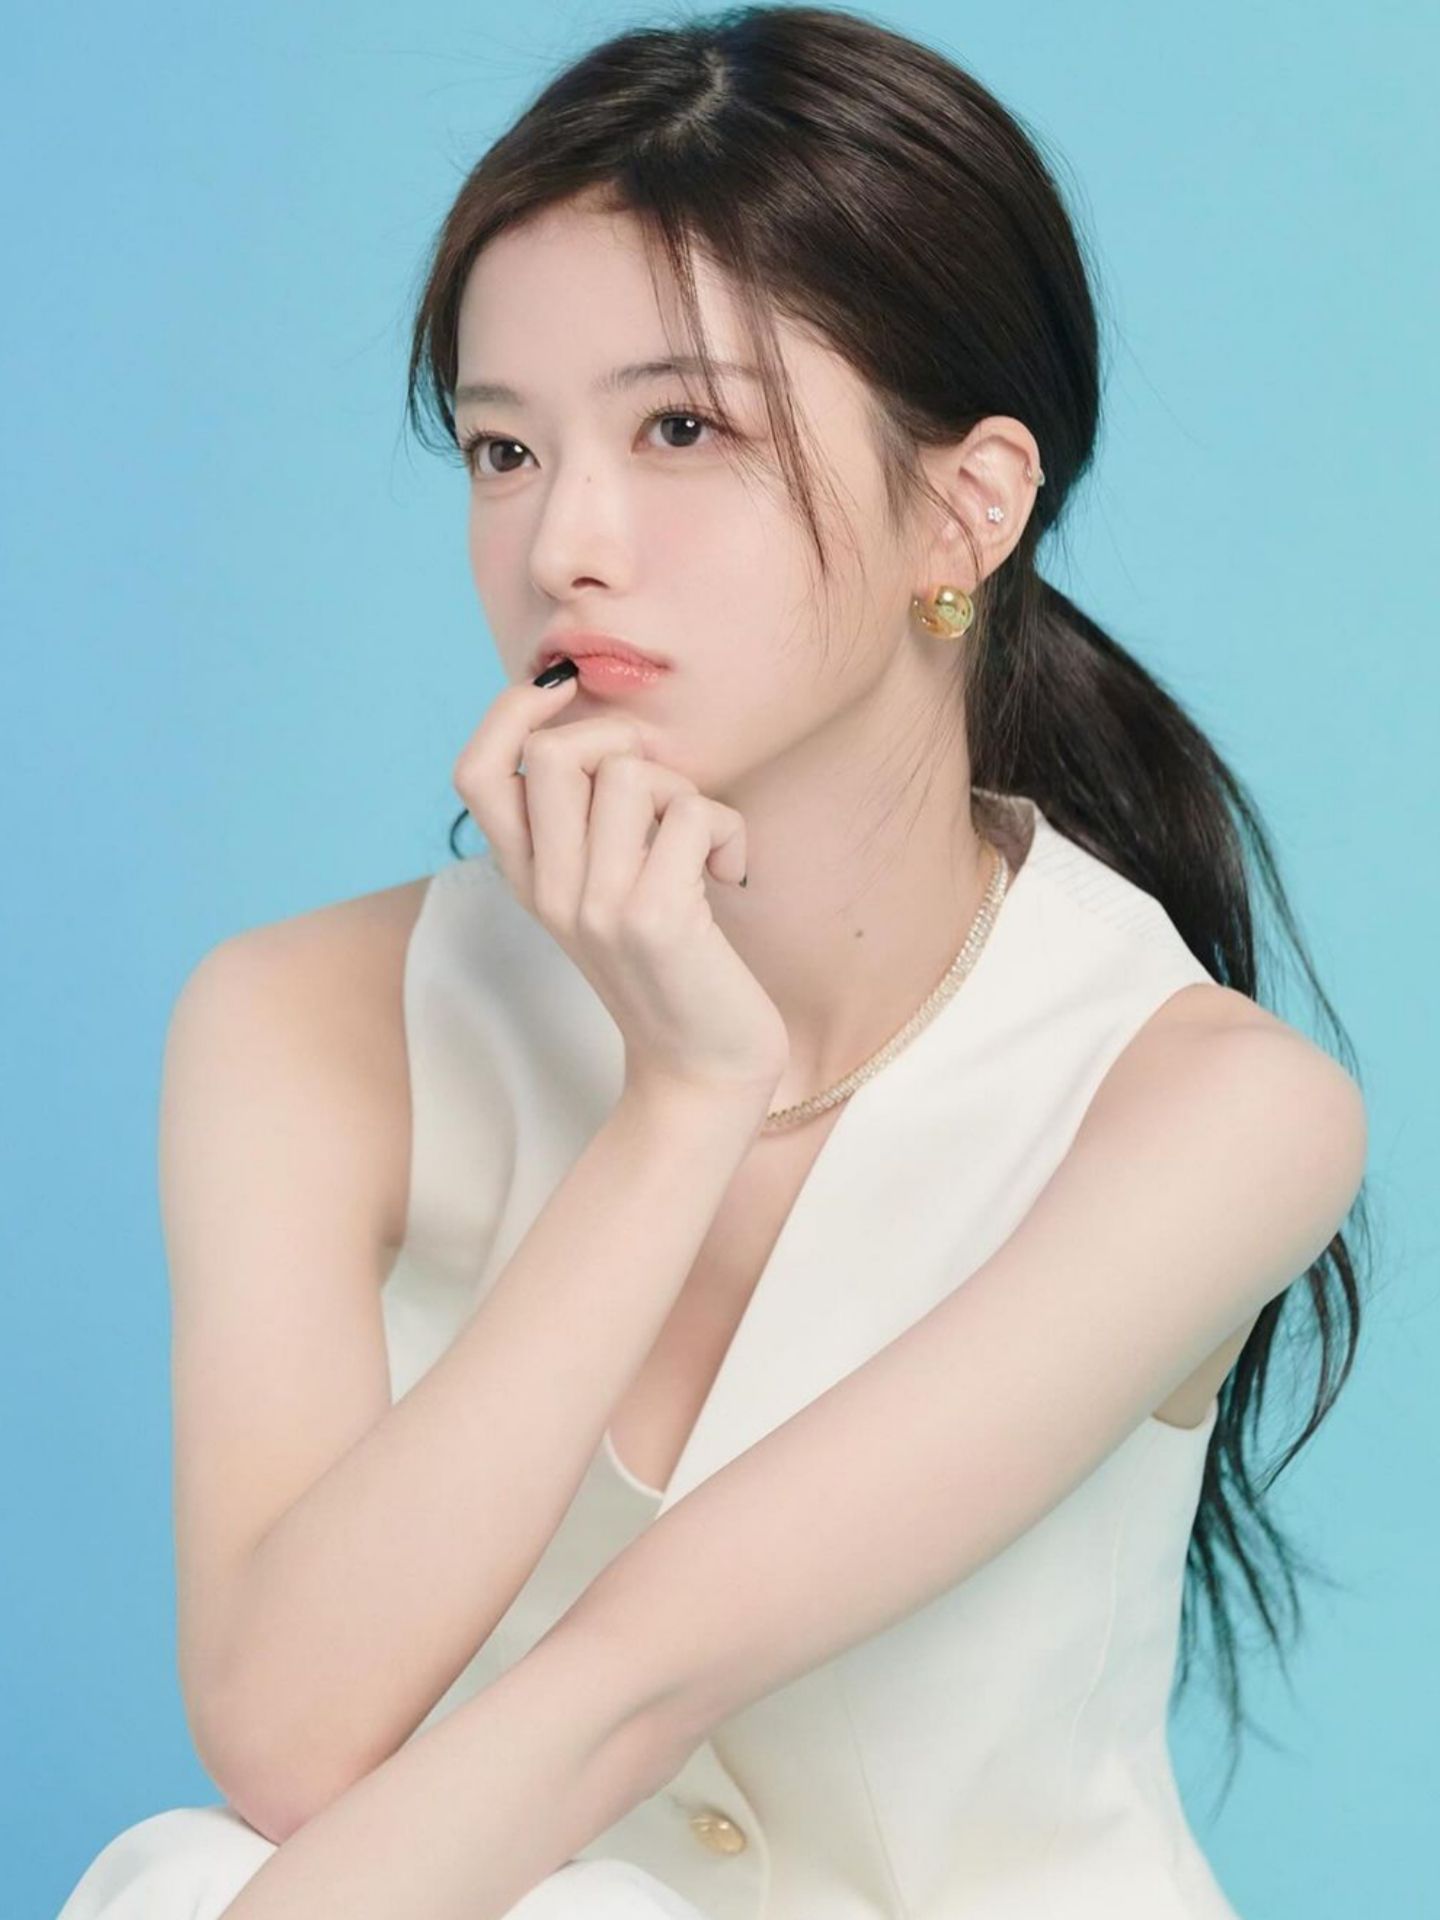 Roh Jeong-eui Berperan Sebagai Pemeran Utama Wanita Dalam Drama Baru MBC “Bunny And Her Boys”